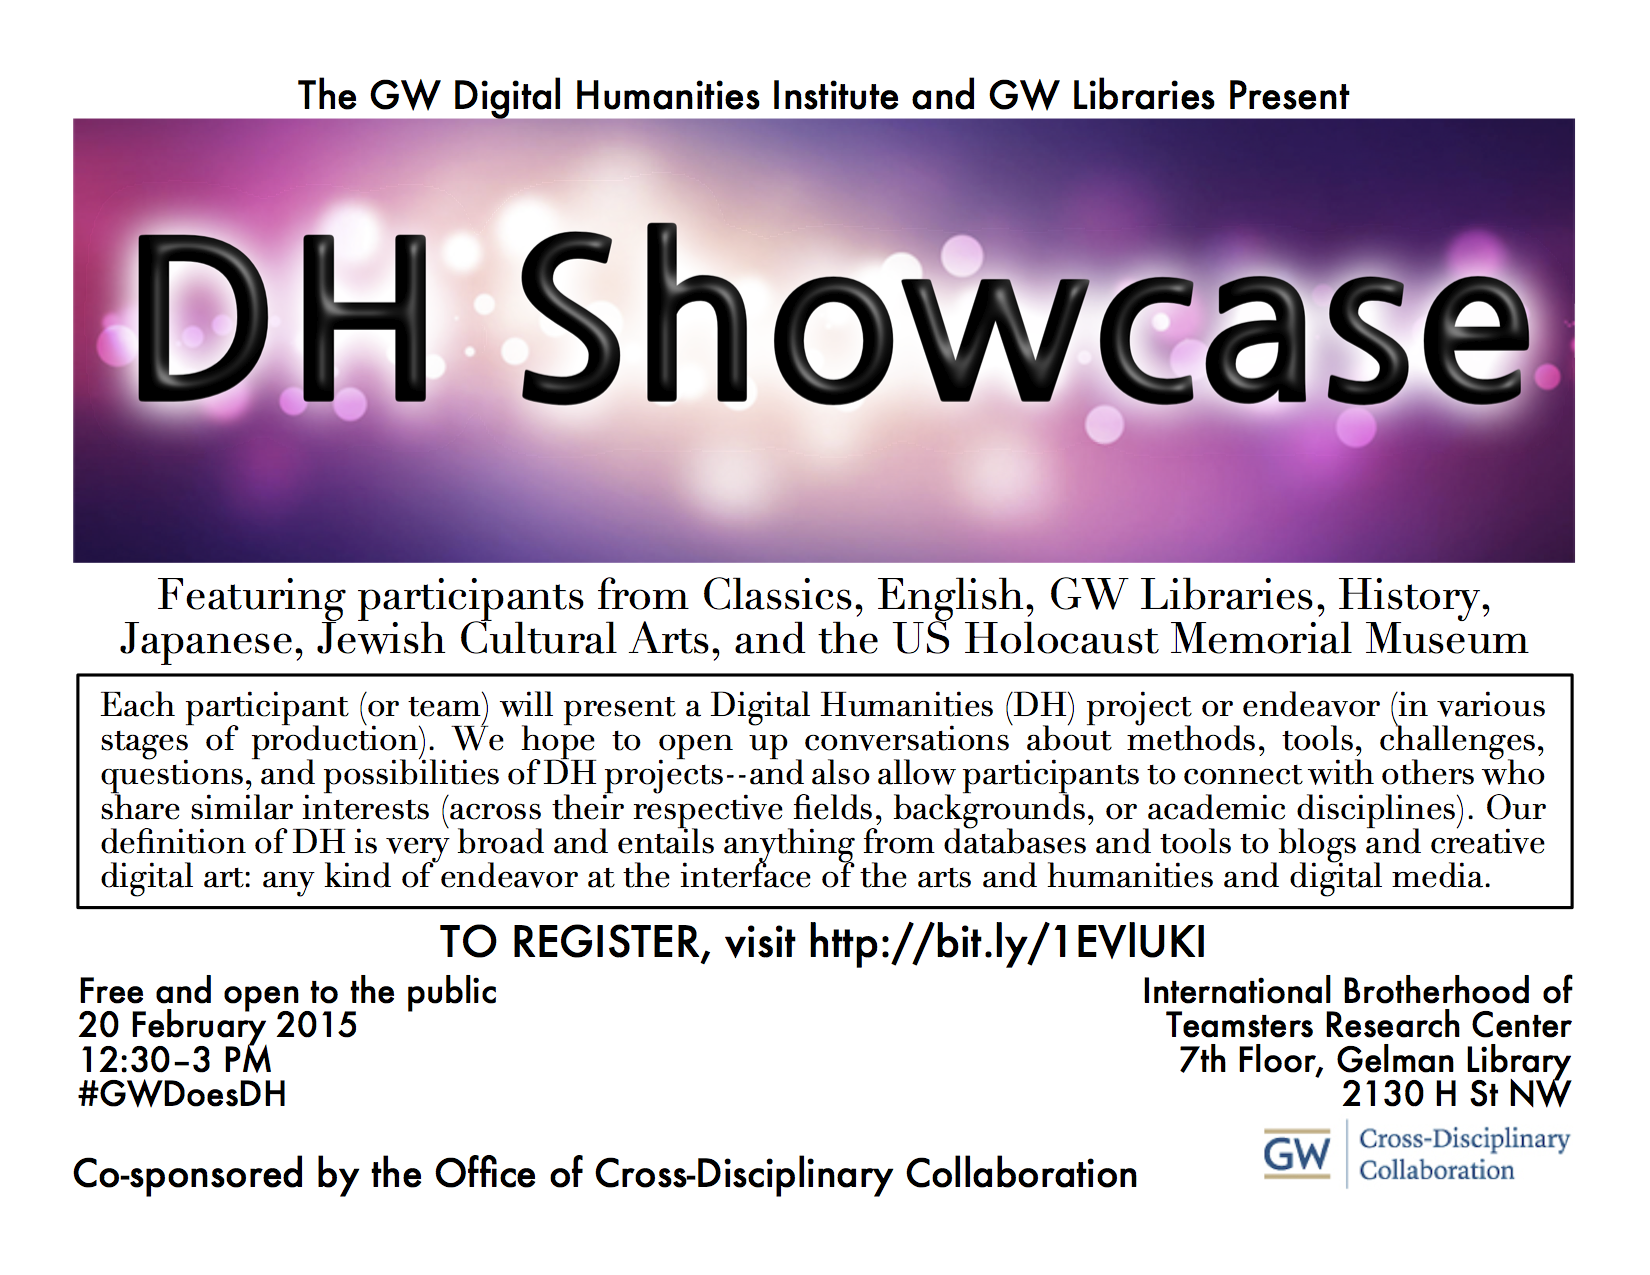 DH Showcase 2015 - flyer